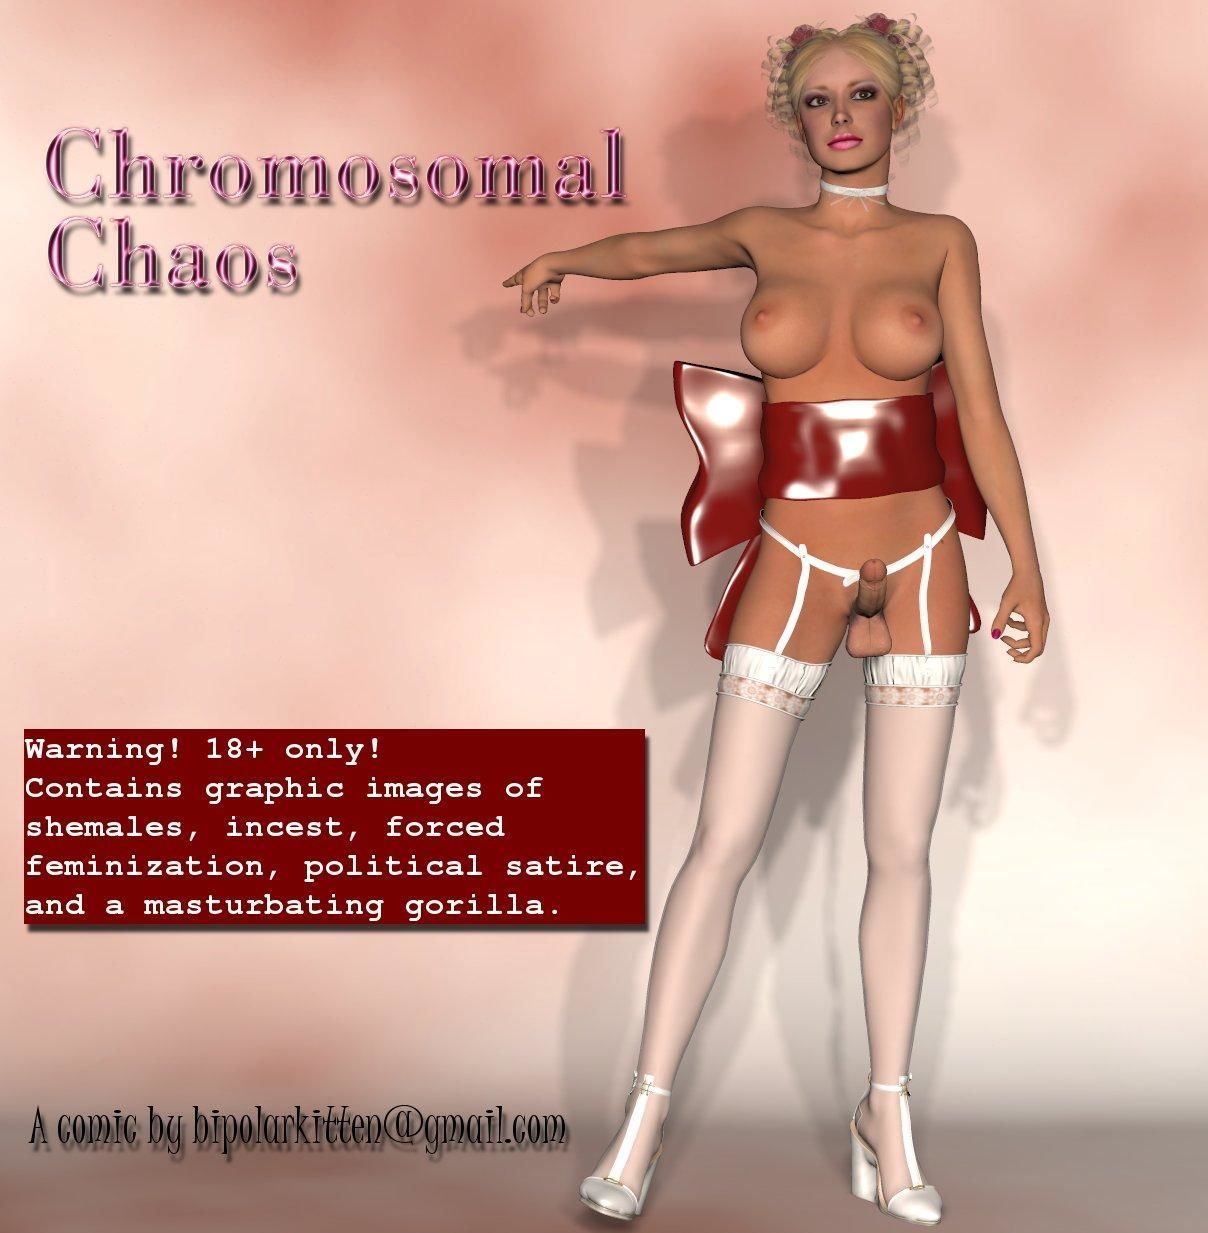 chromosomowe chaos